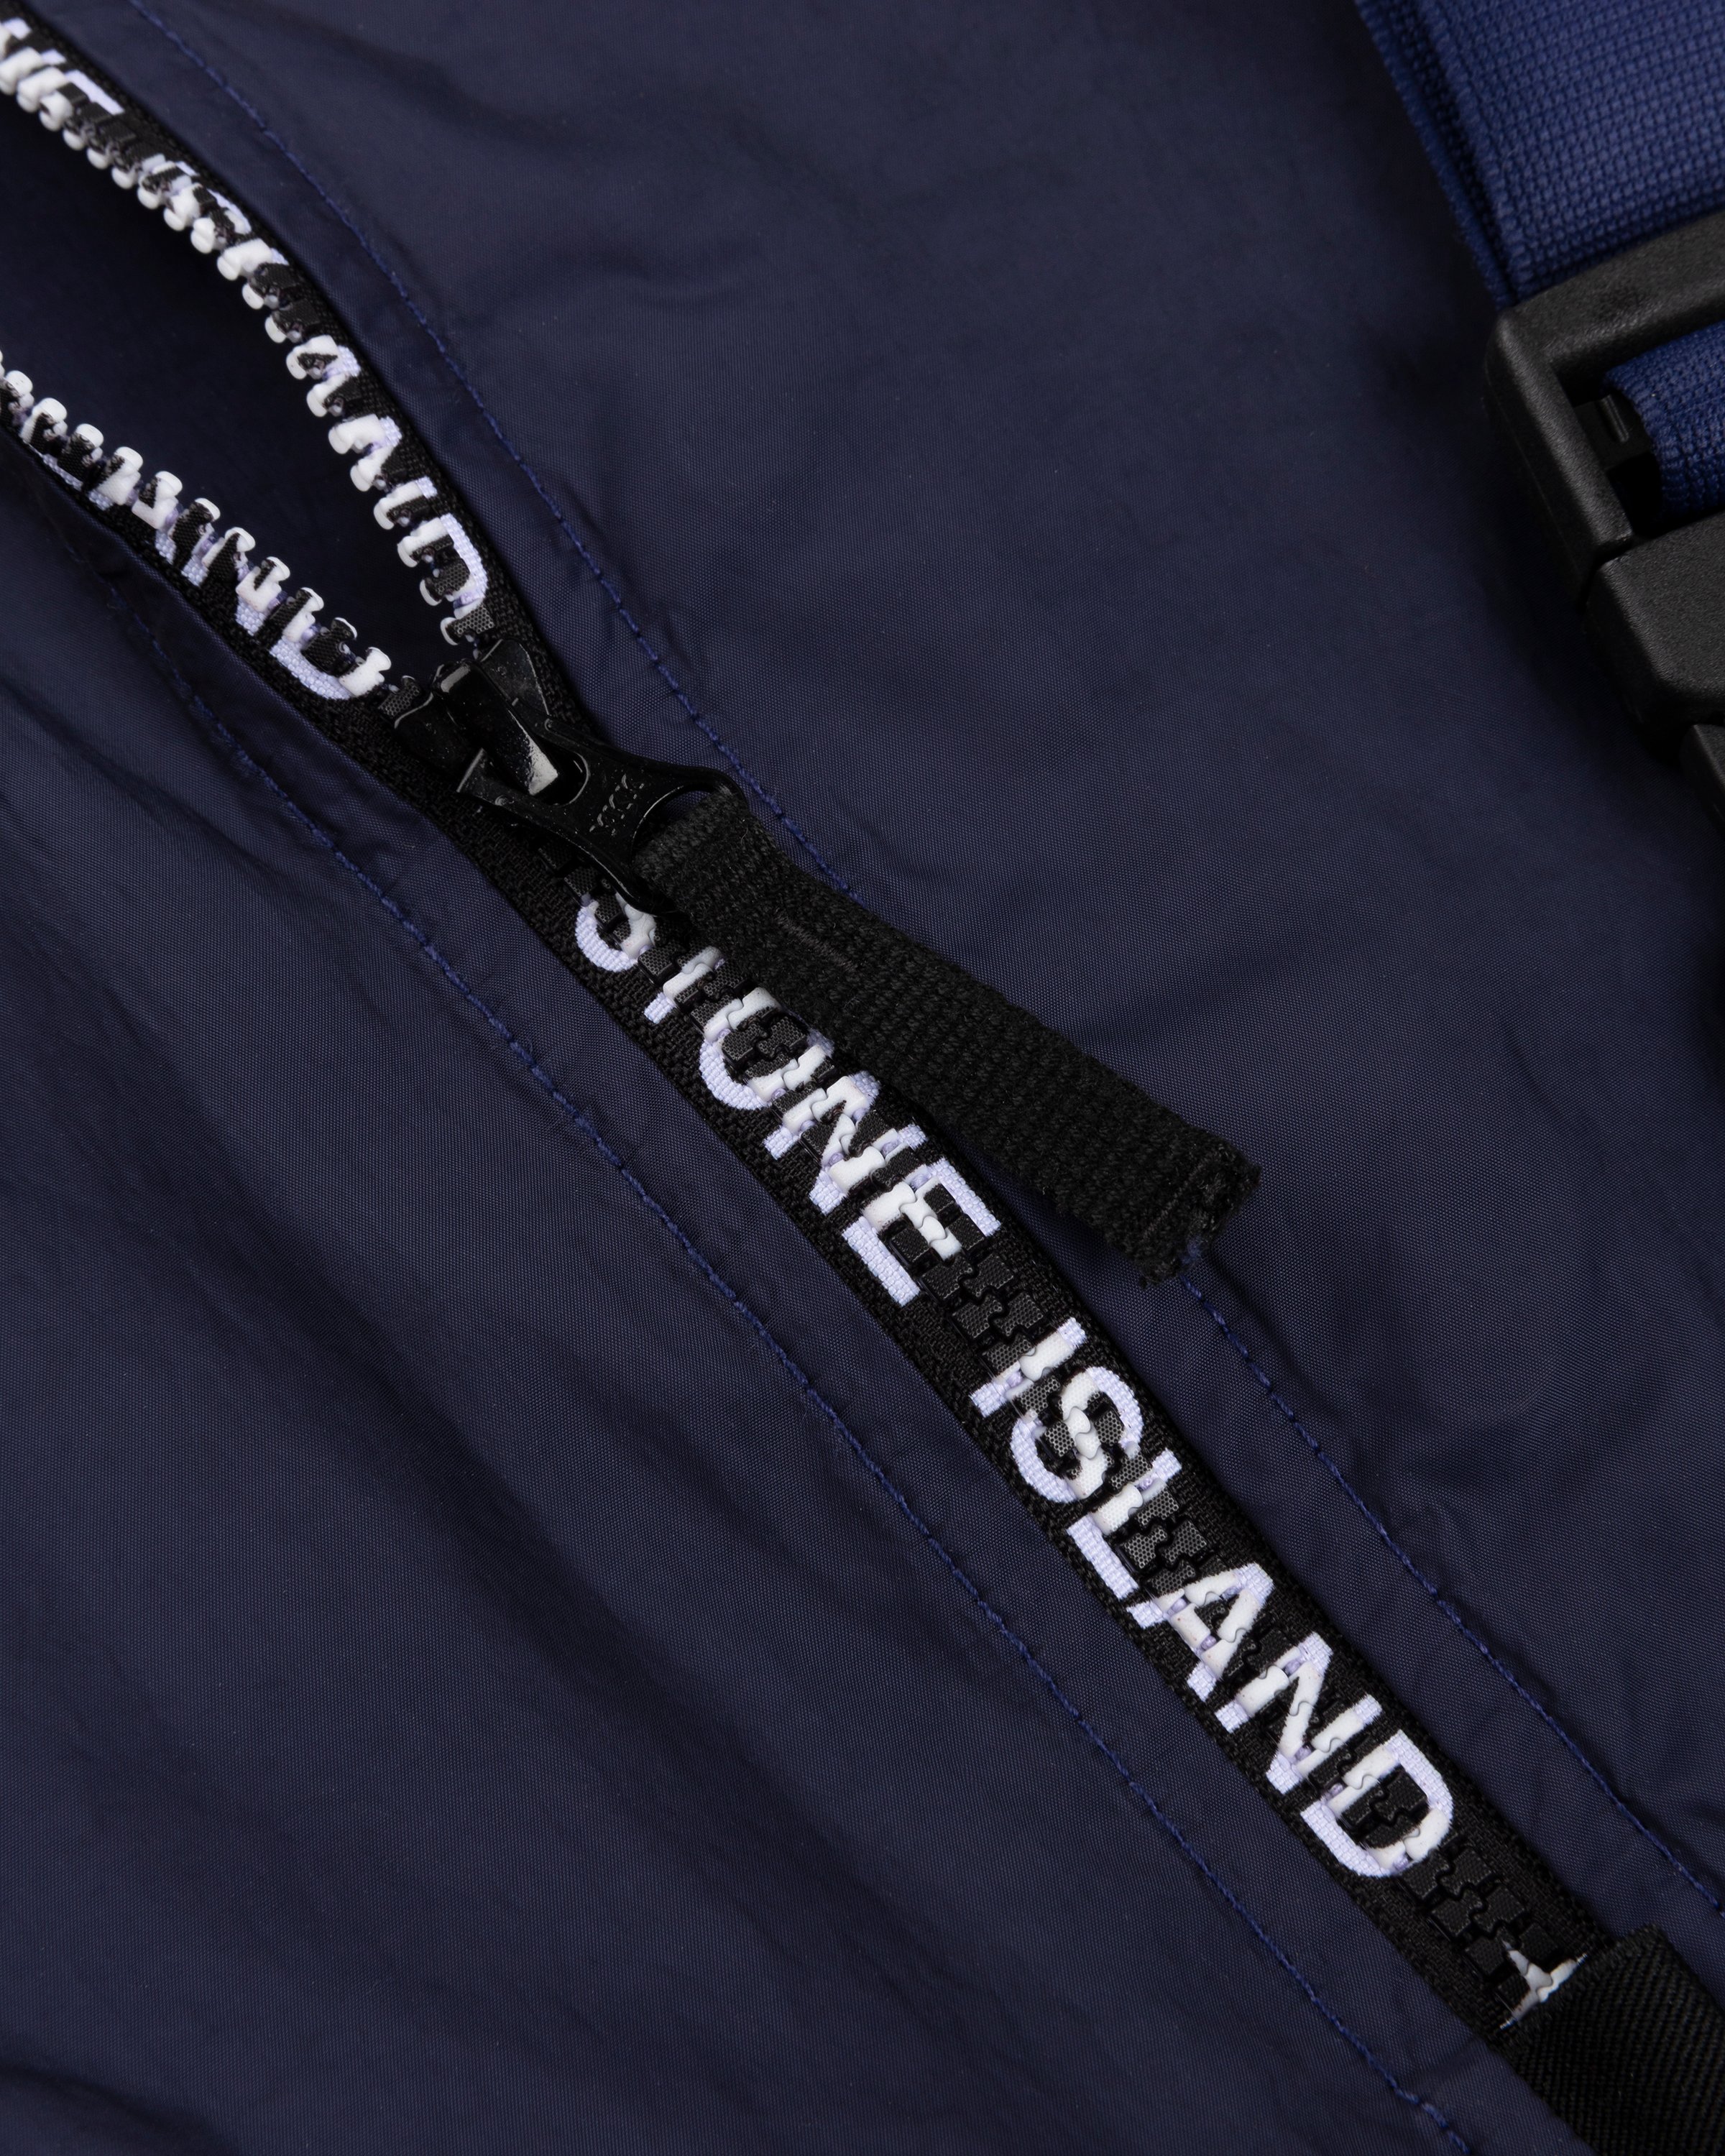 Stone Island - 93466 Logo Beach Towel With Nylon Bag Royal - Lifestyle - Blue - Image 6